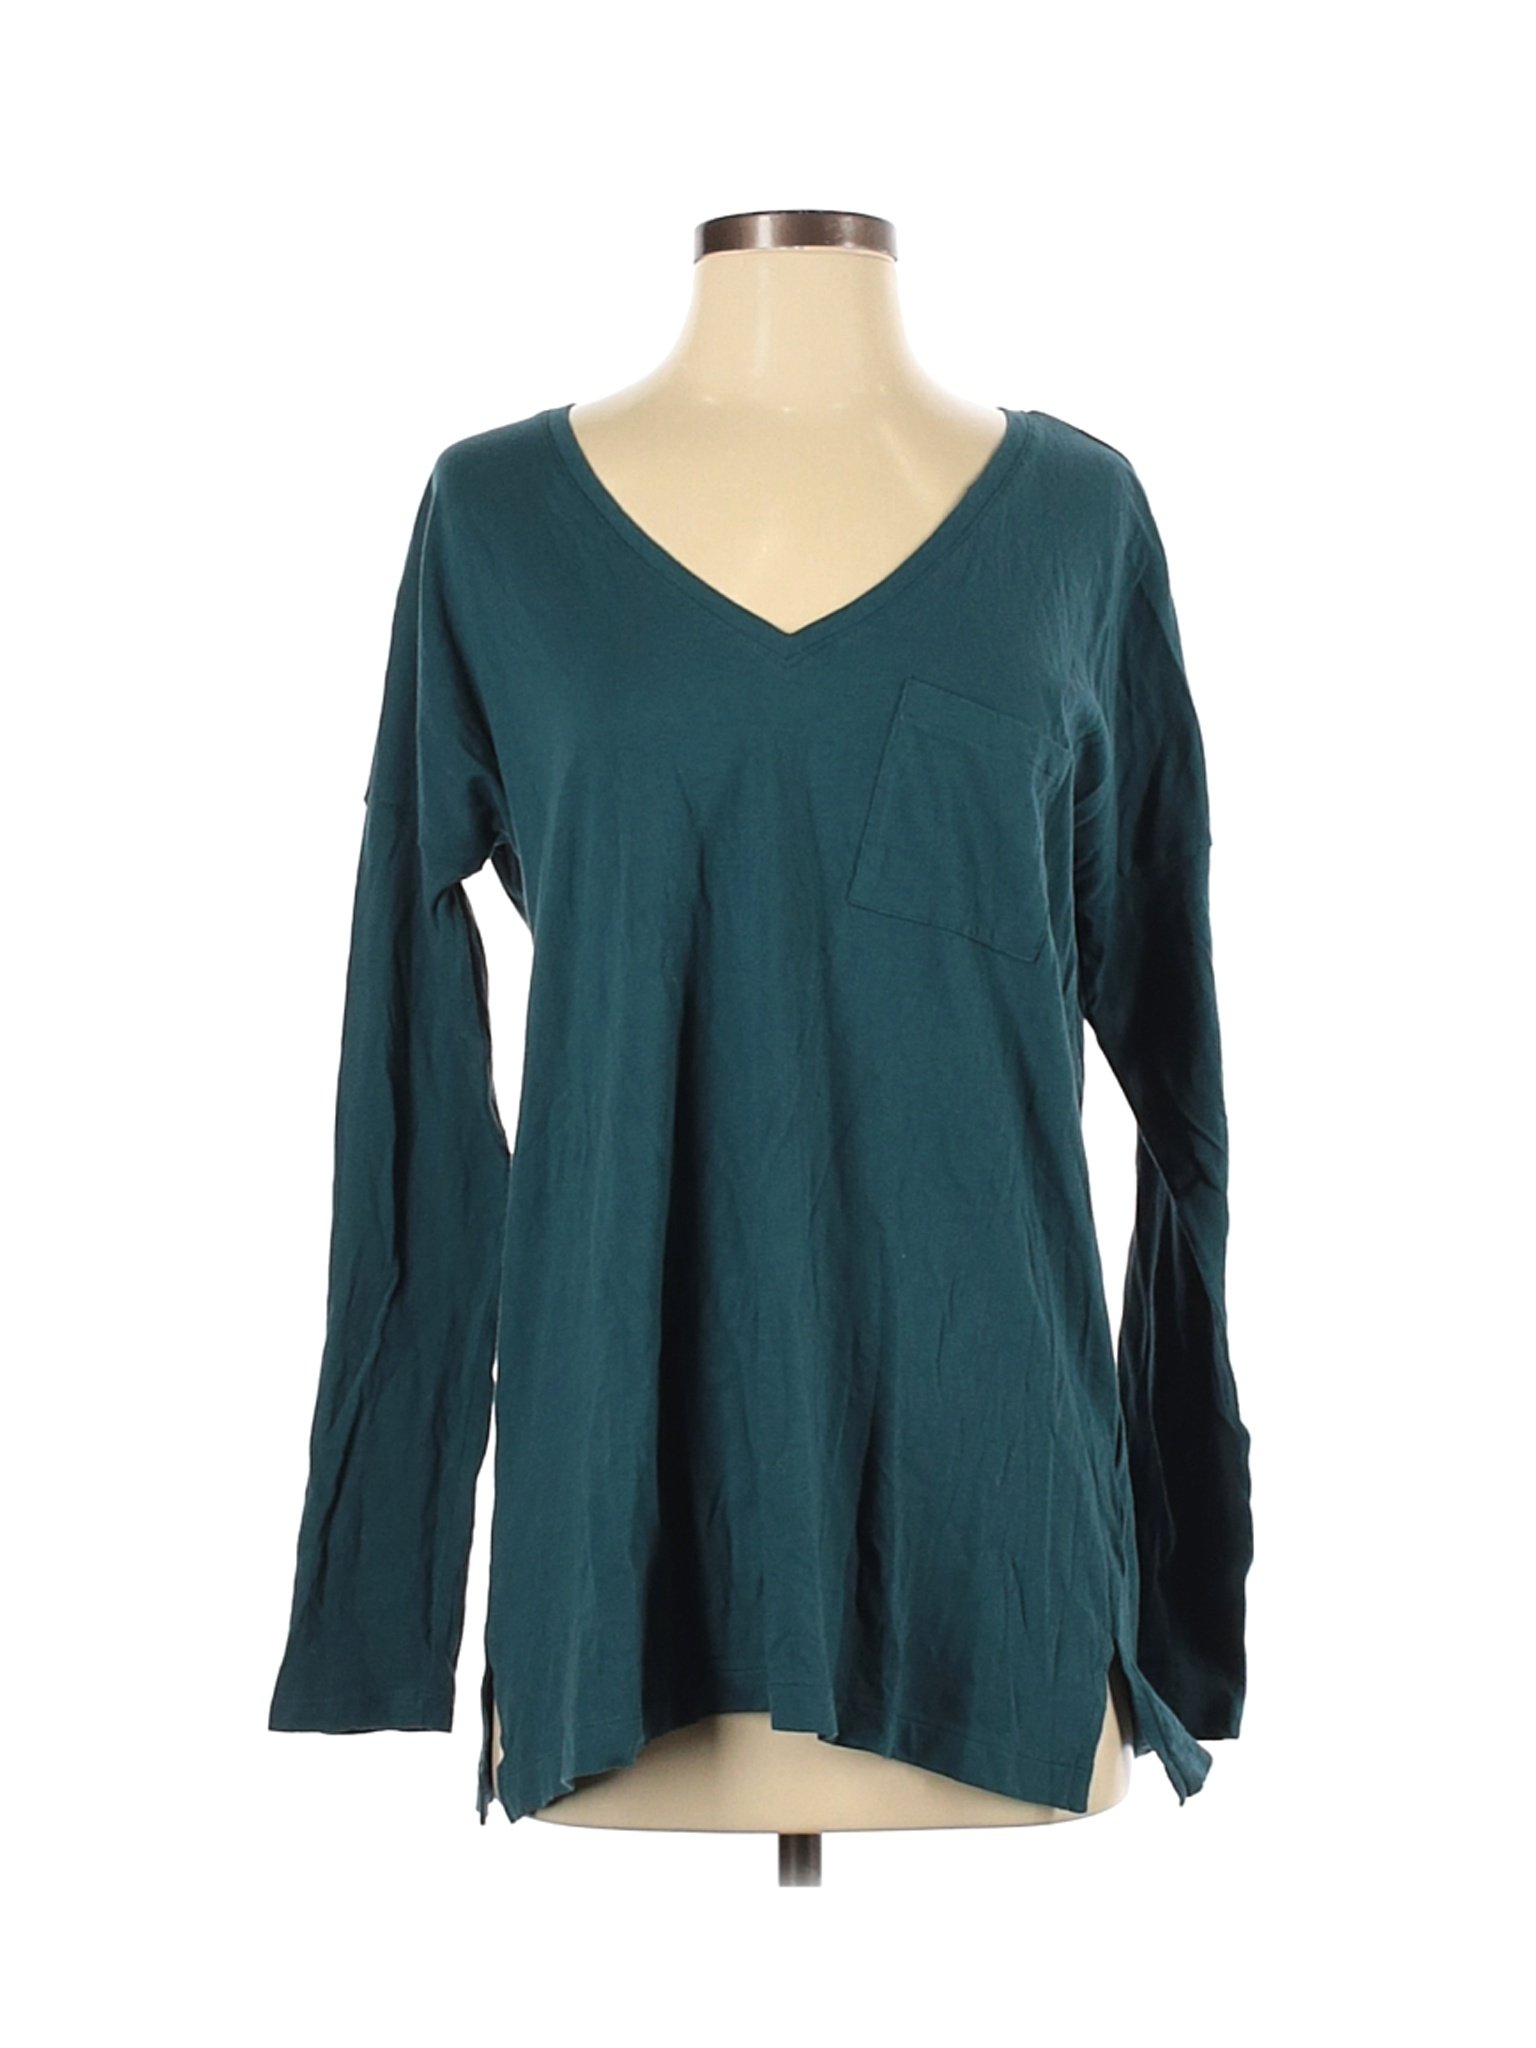 NWT Old Navy Women Green Long Sleeve T-Shirt S | eBay